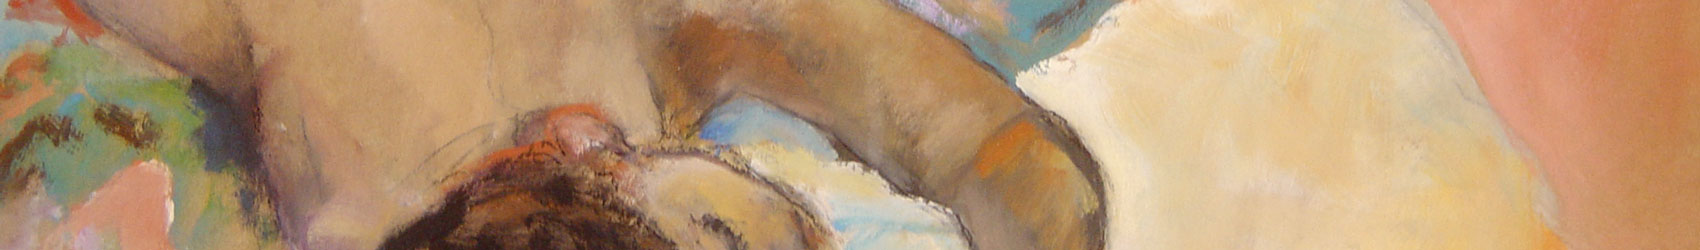 peintures de nus - jean-paul clayette